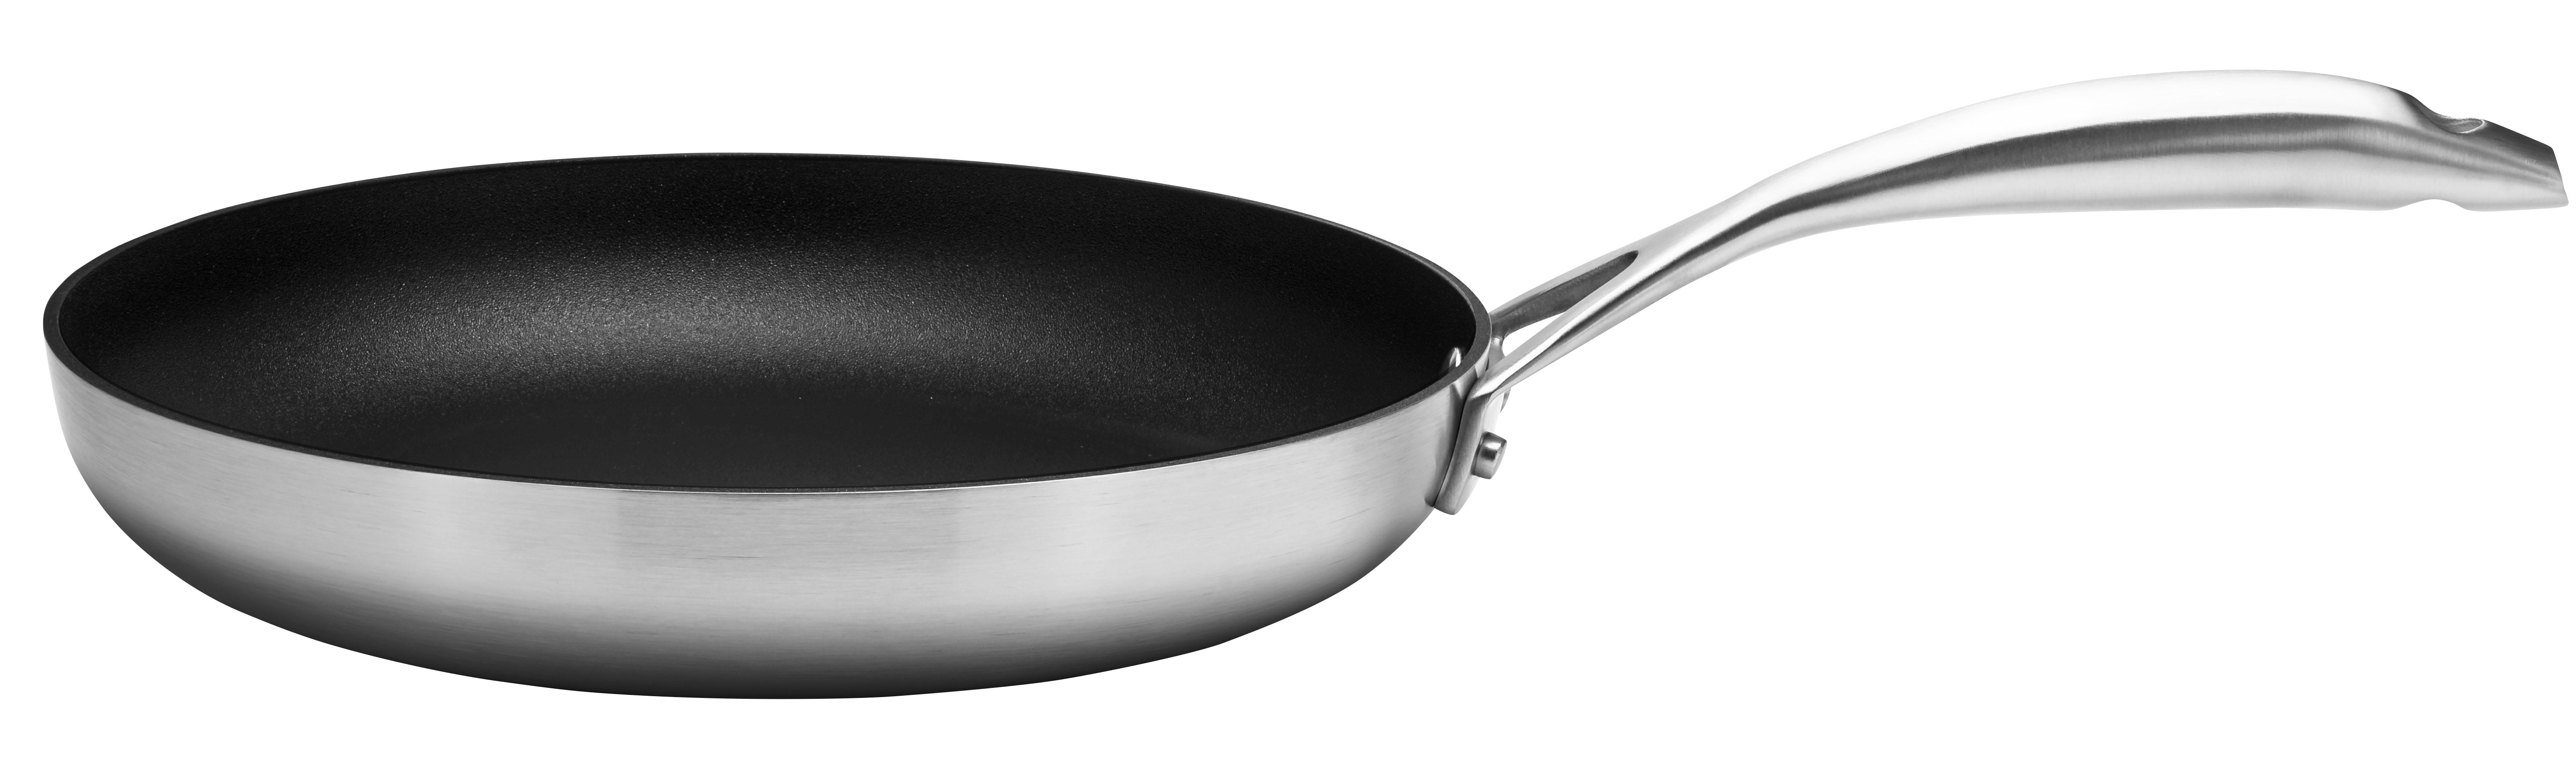 SCANPAN CS+ 28cm Frying Pan